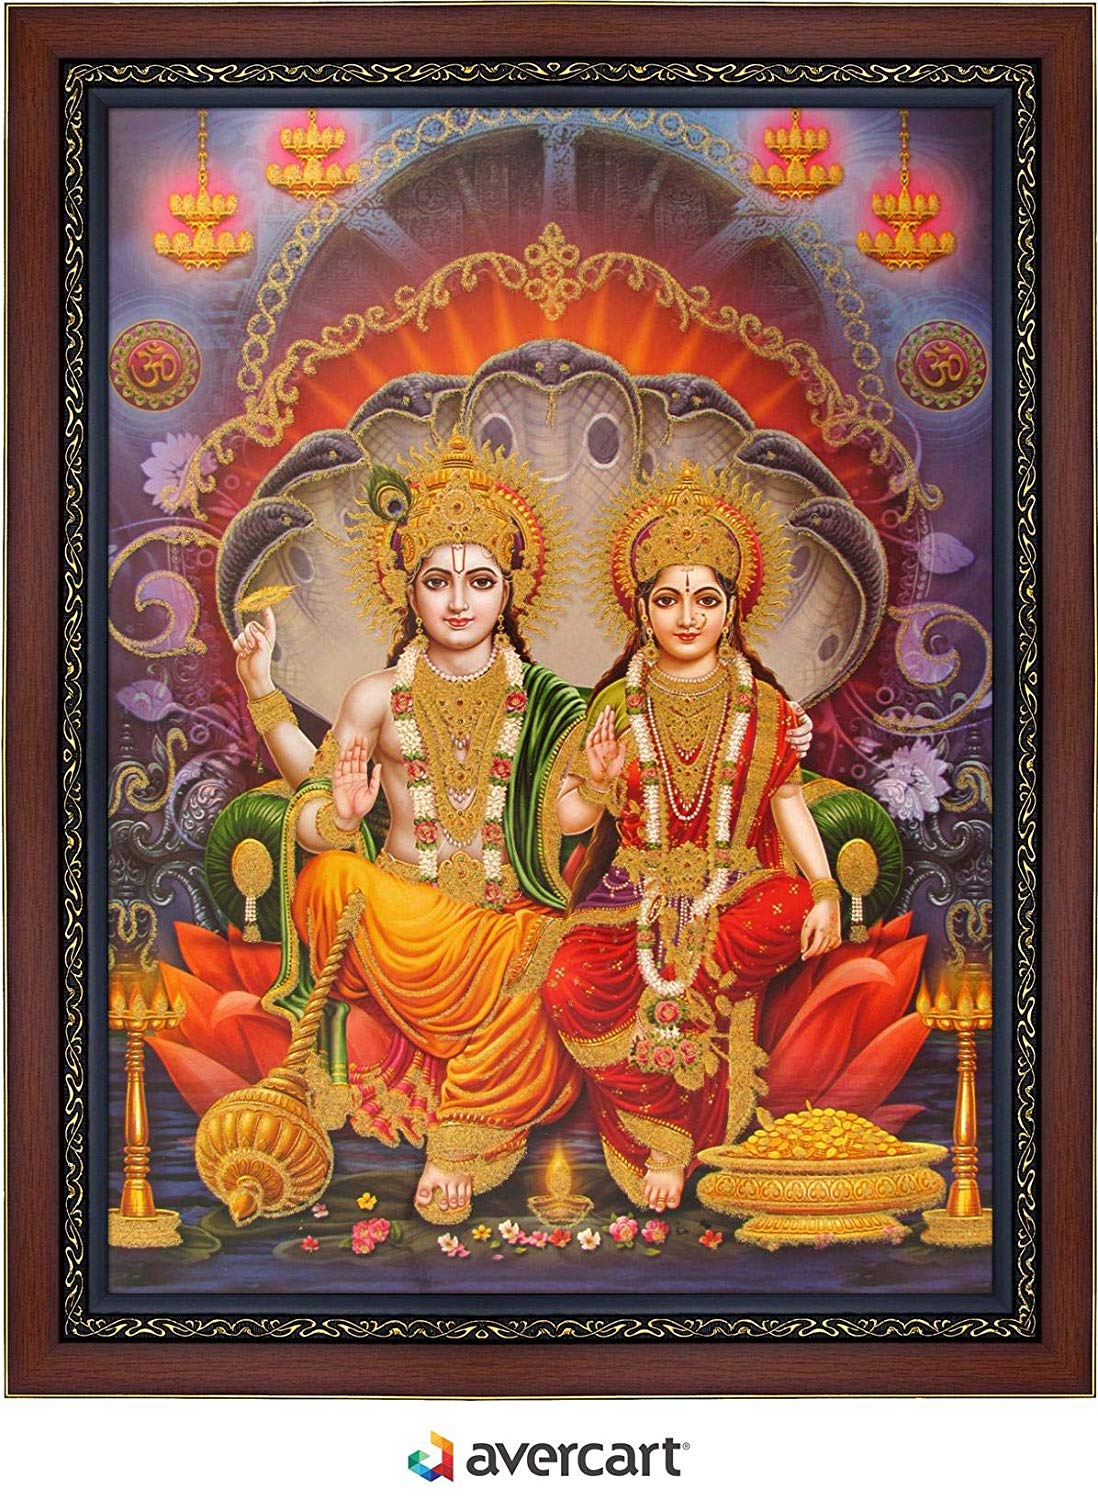 File:Vishnu Aur Maa Laxmi.jpg - Wikimedia Commons